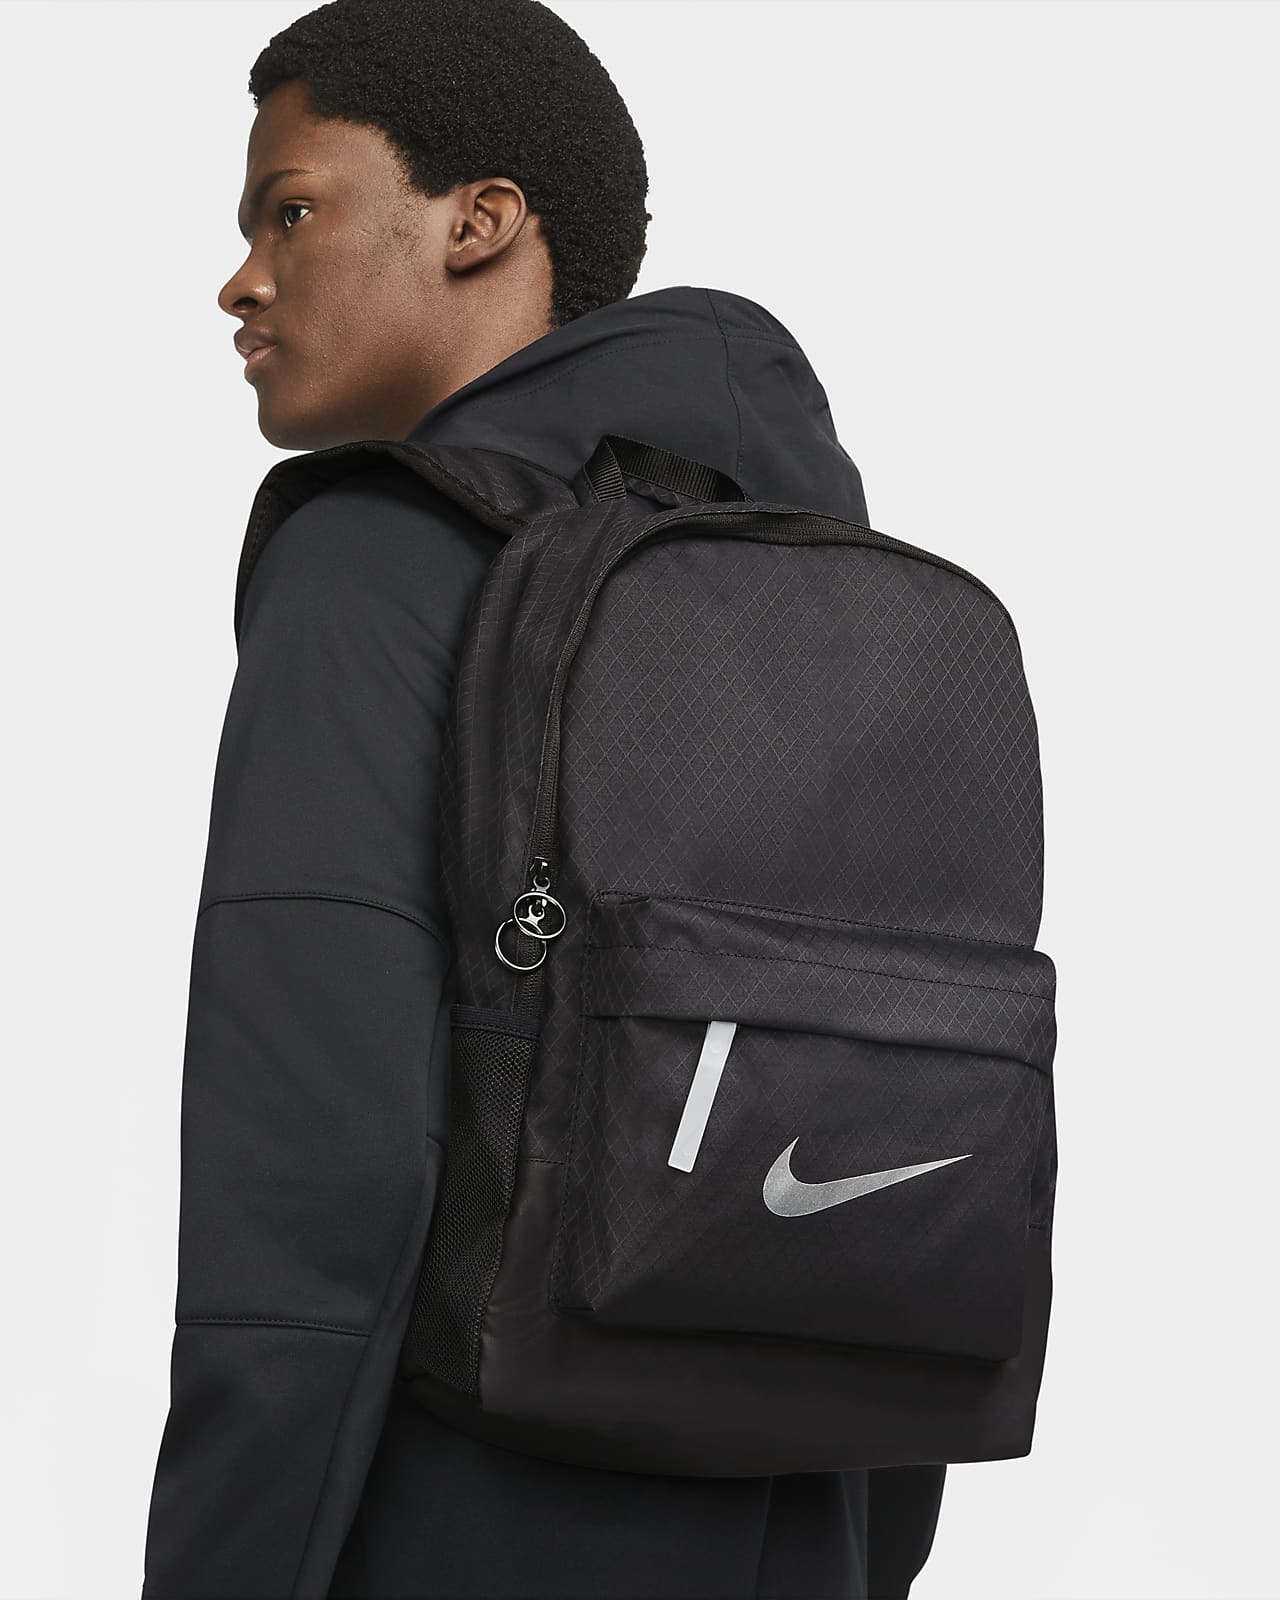 Ryggsäck Nike Sportswear Heritage för vintern (25L)